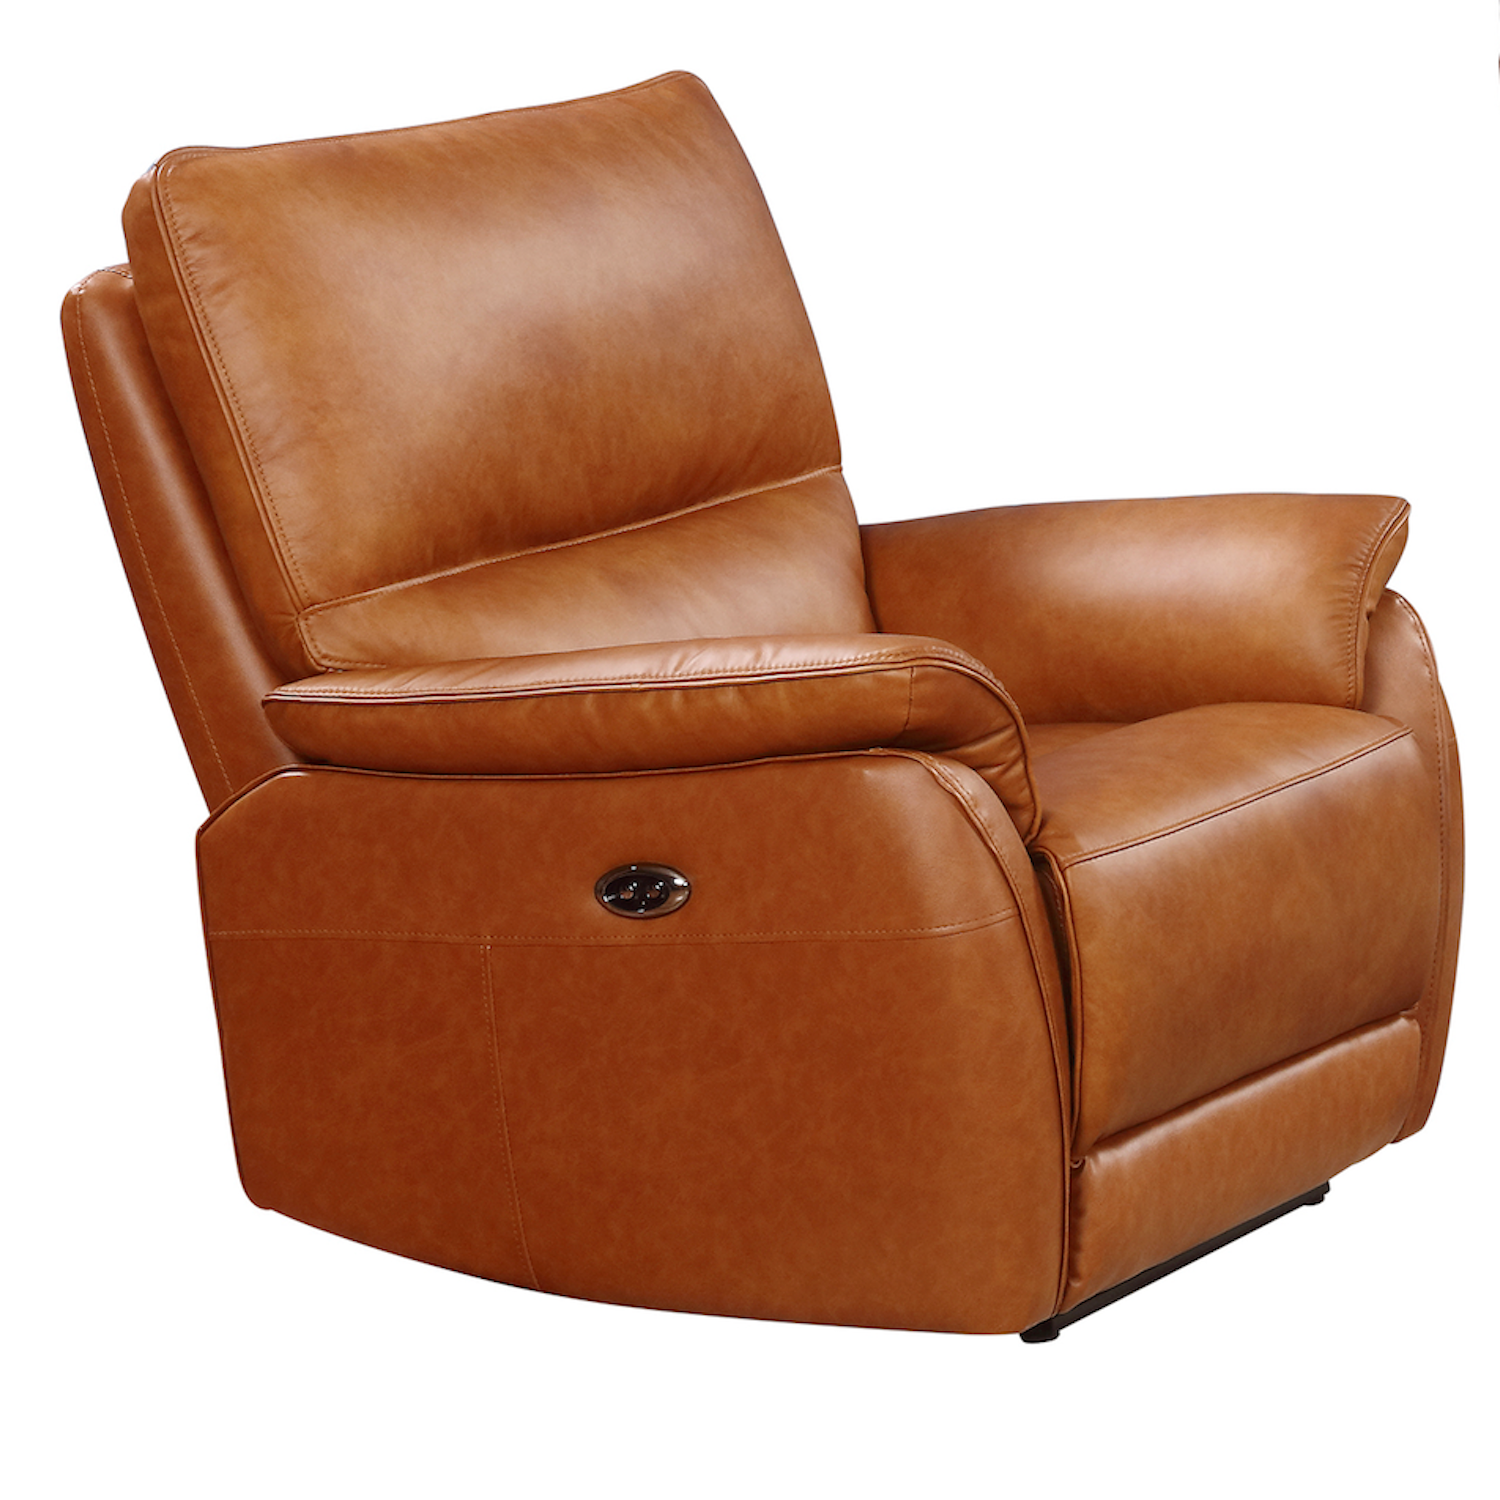 Esprit Manual Recliner Chair Tan Leather